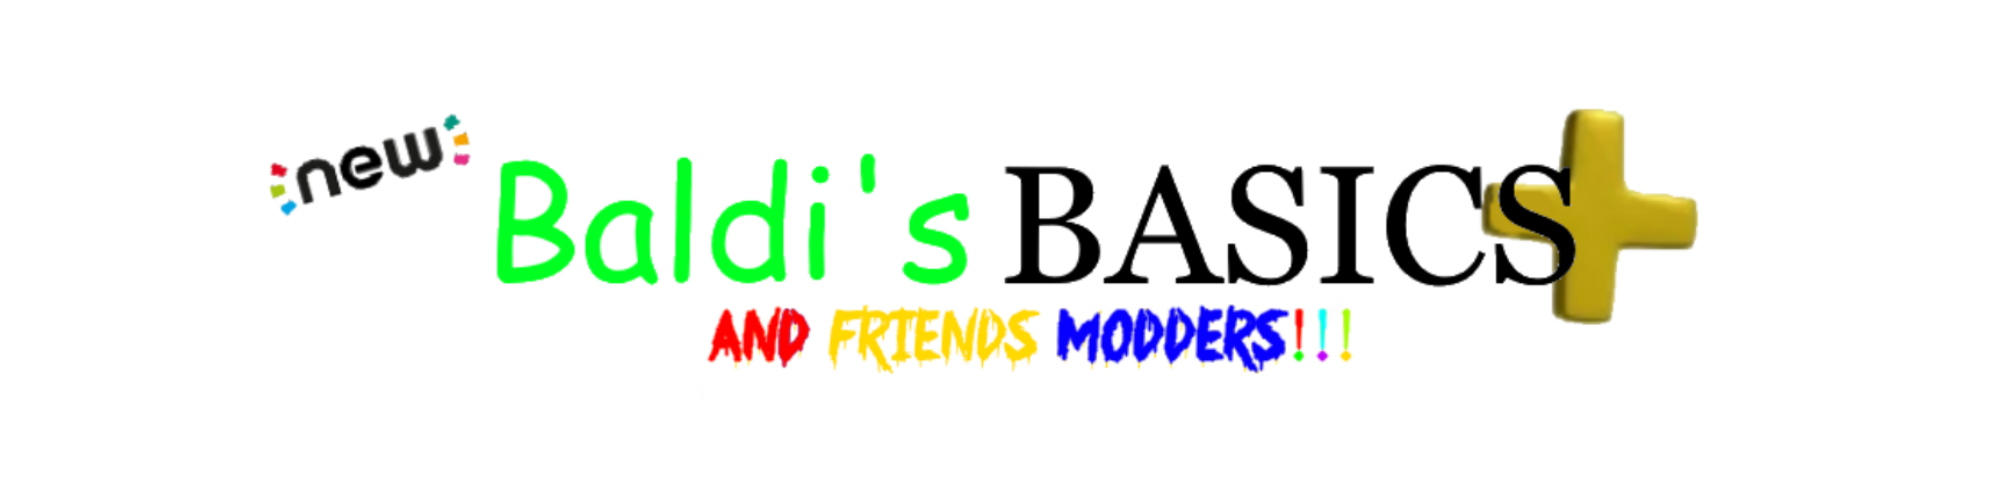 Baldi's and Friends Modders Basics